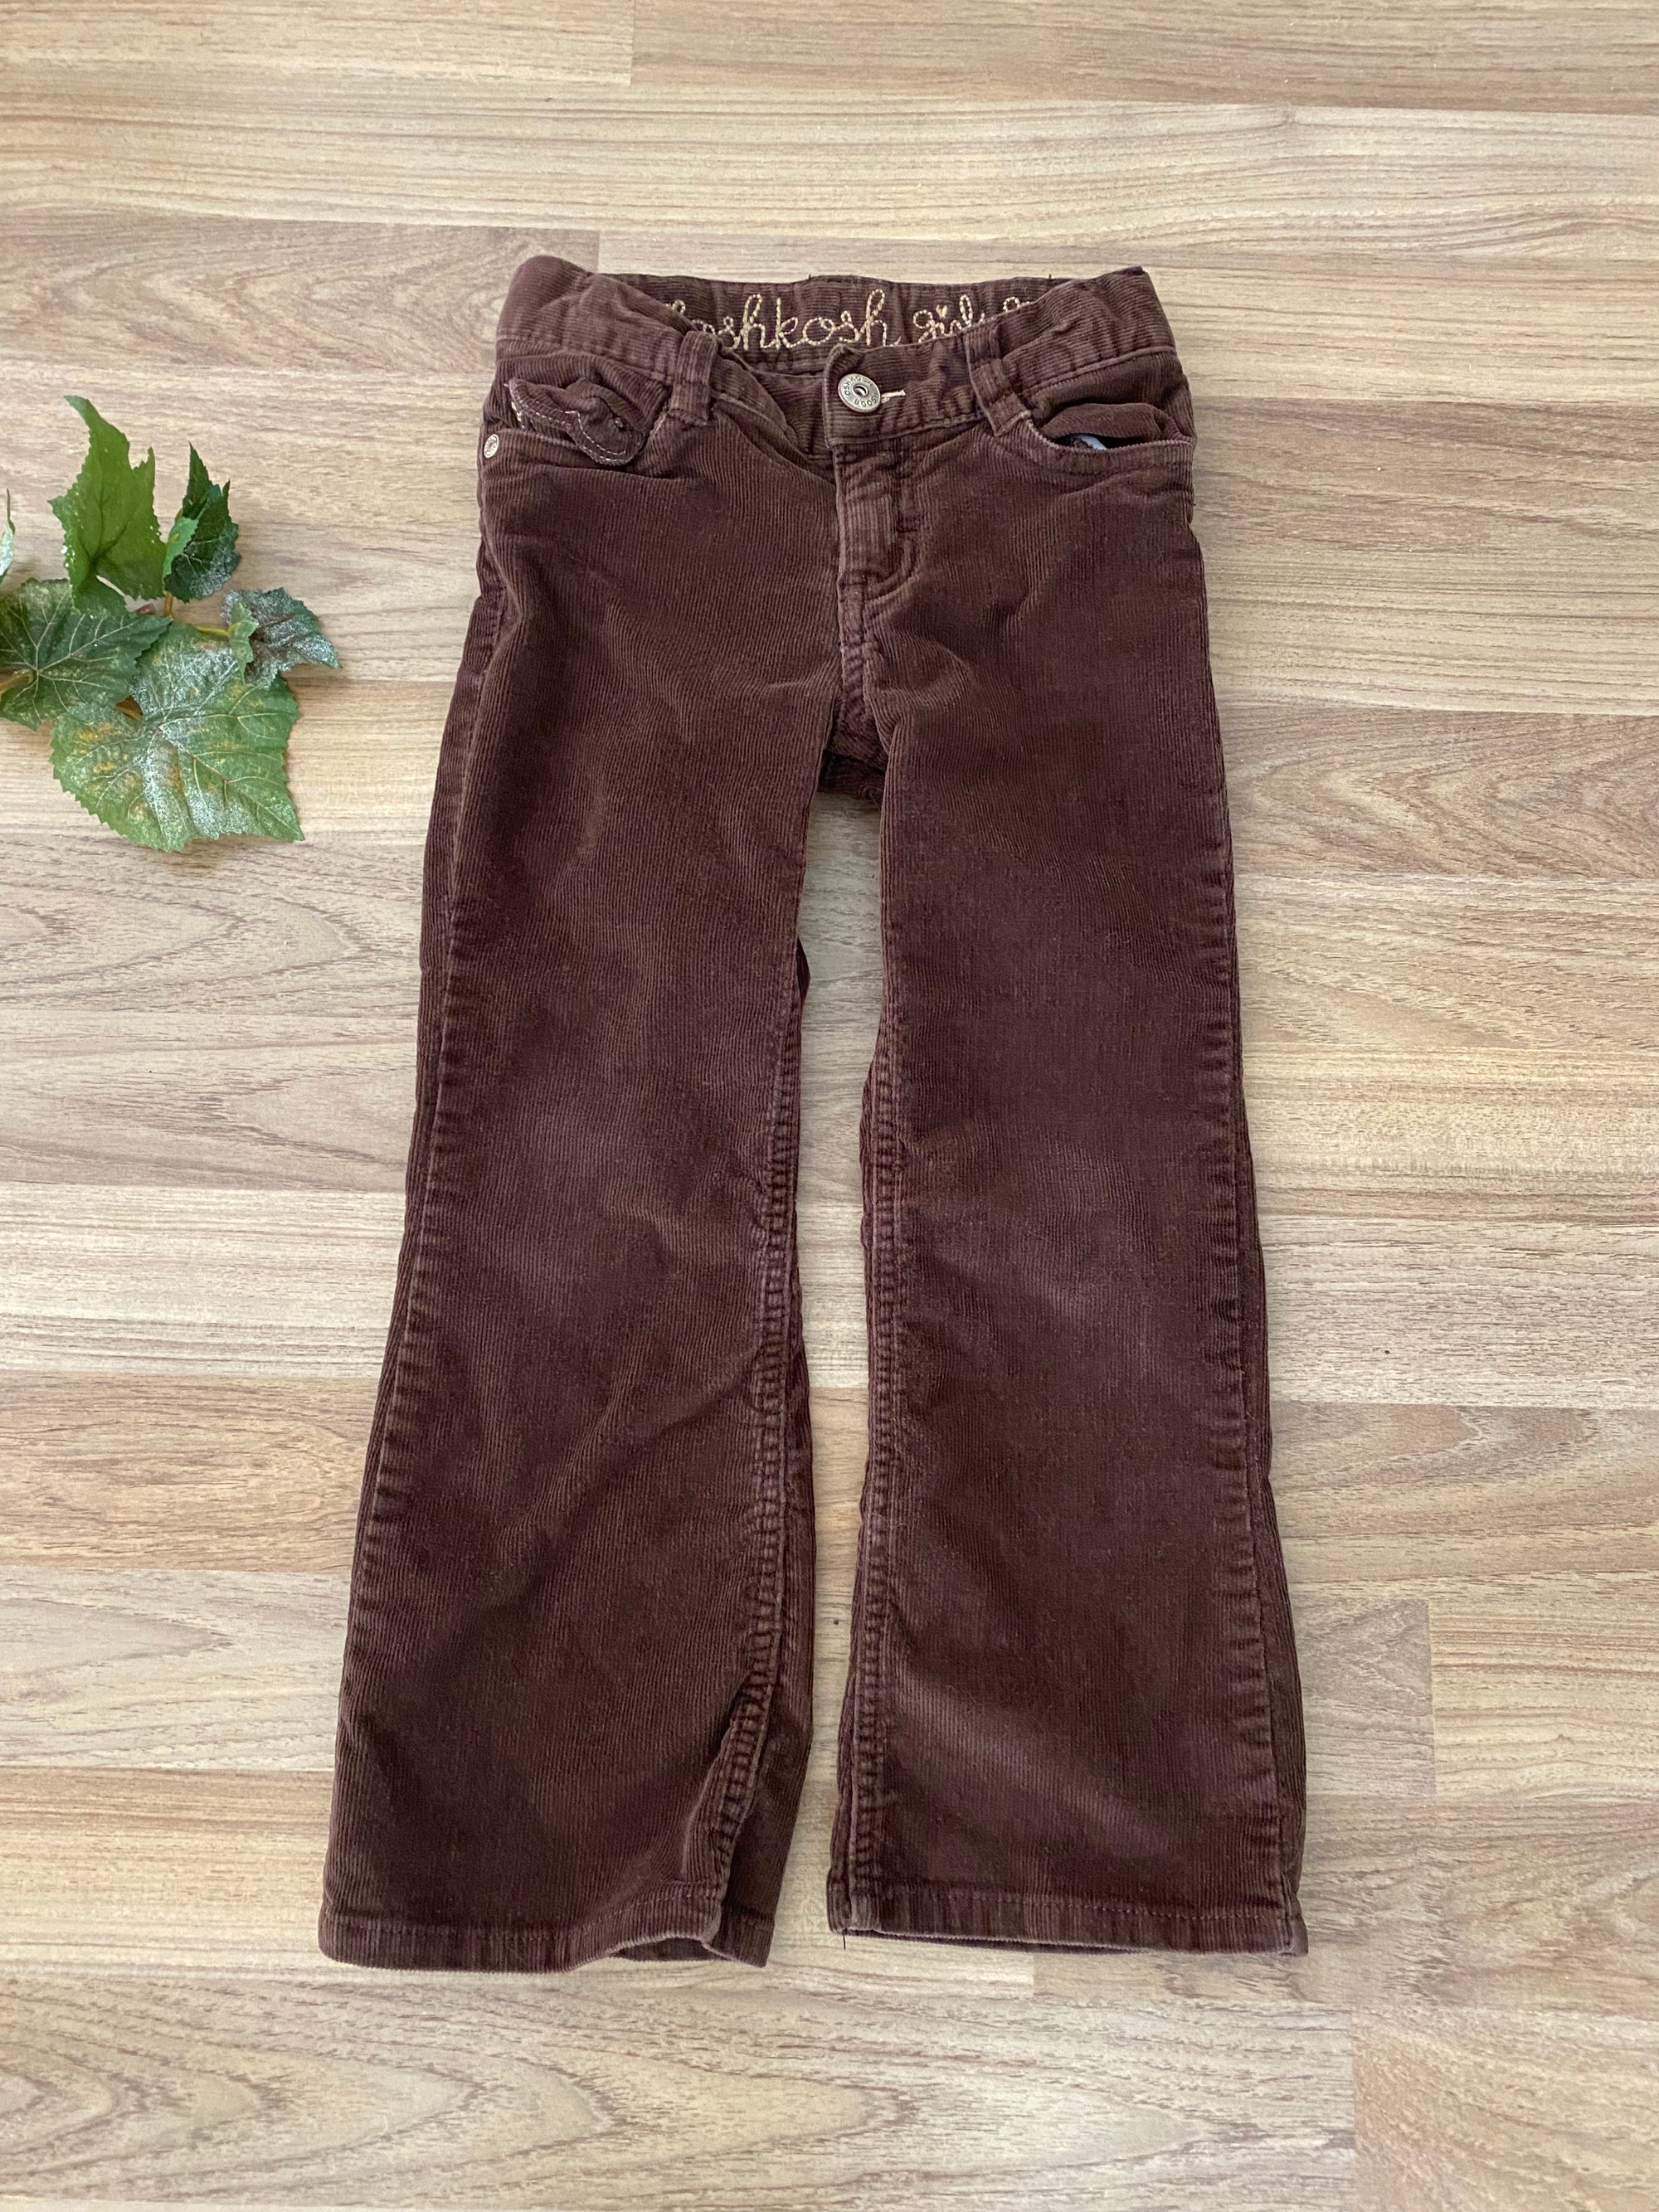 Corduroy Pants (Girls Size 4)